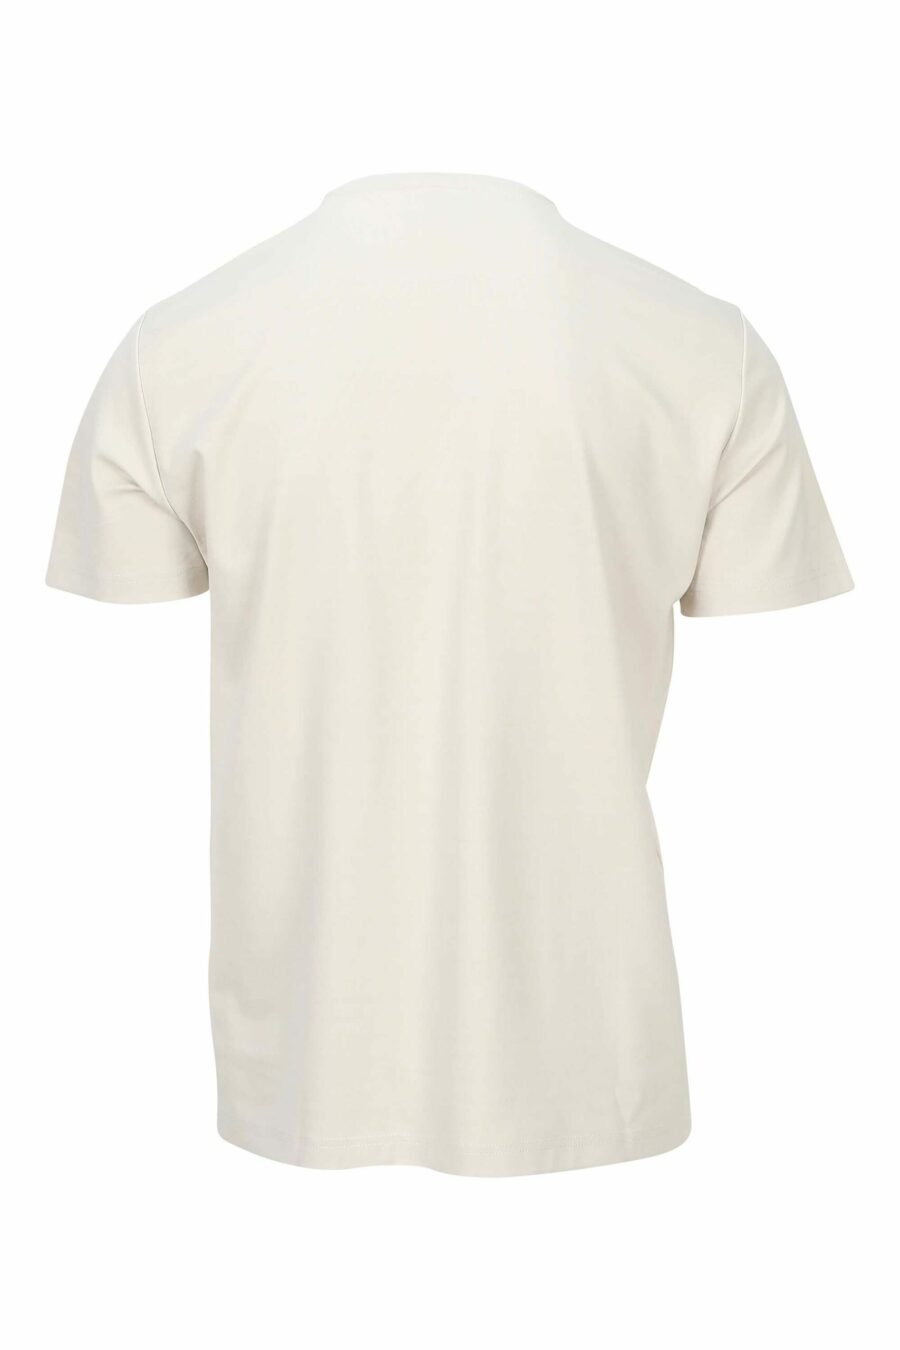 Camiseta gris con maxilogo "lux identity" negro - 8057767001988 1 scaled